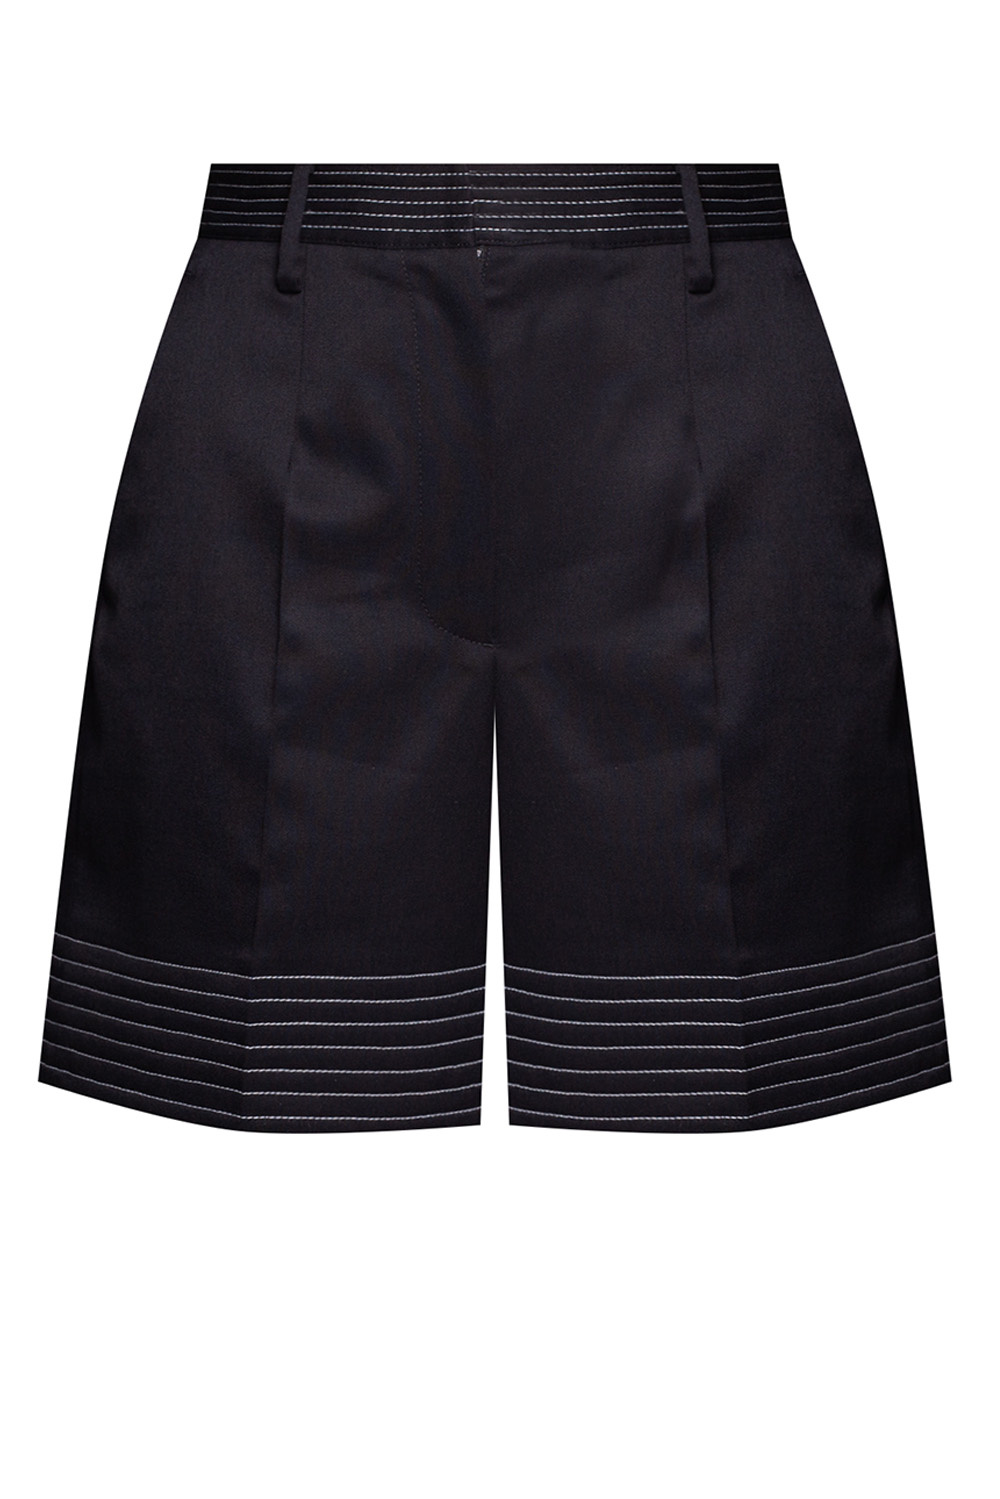 MM6 Maison Margiela Pleat-front shorts